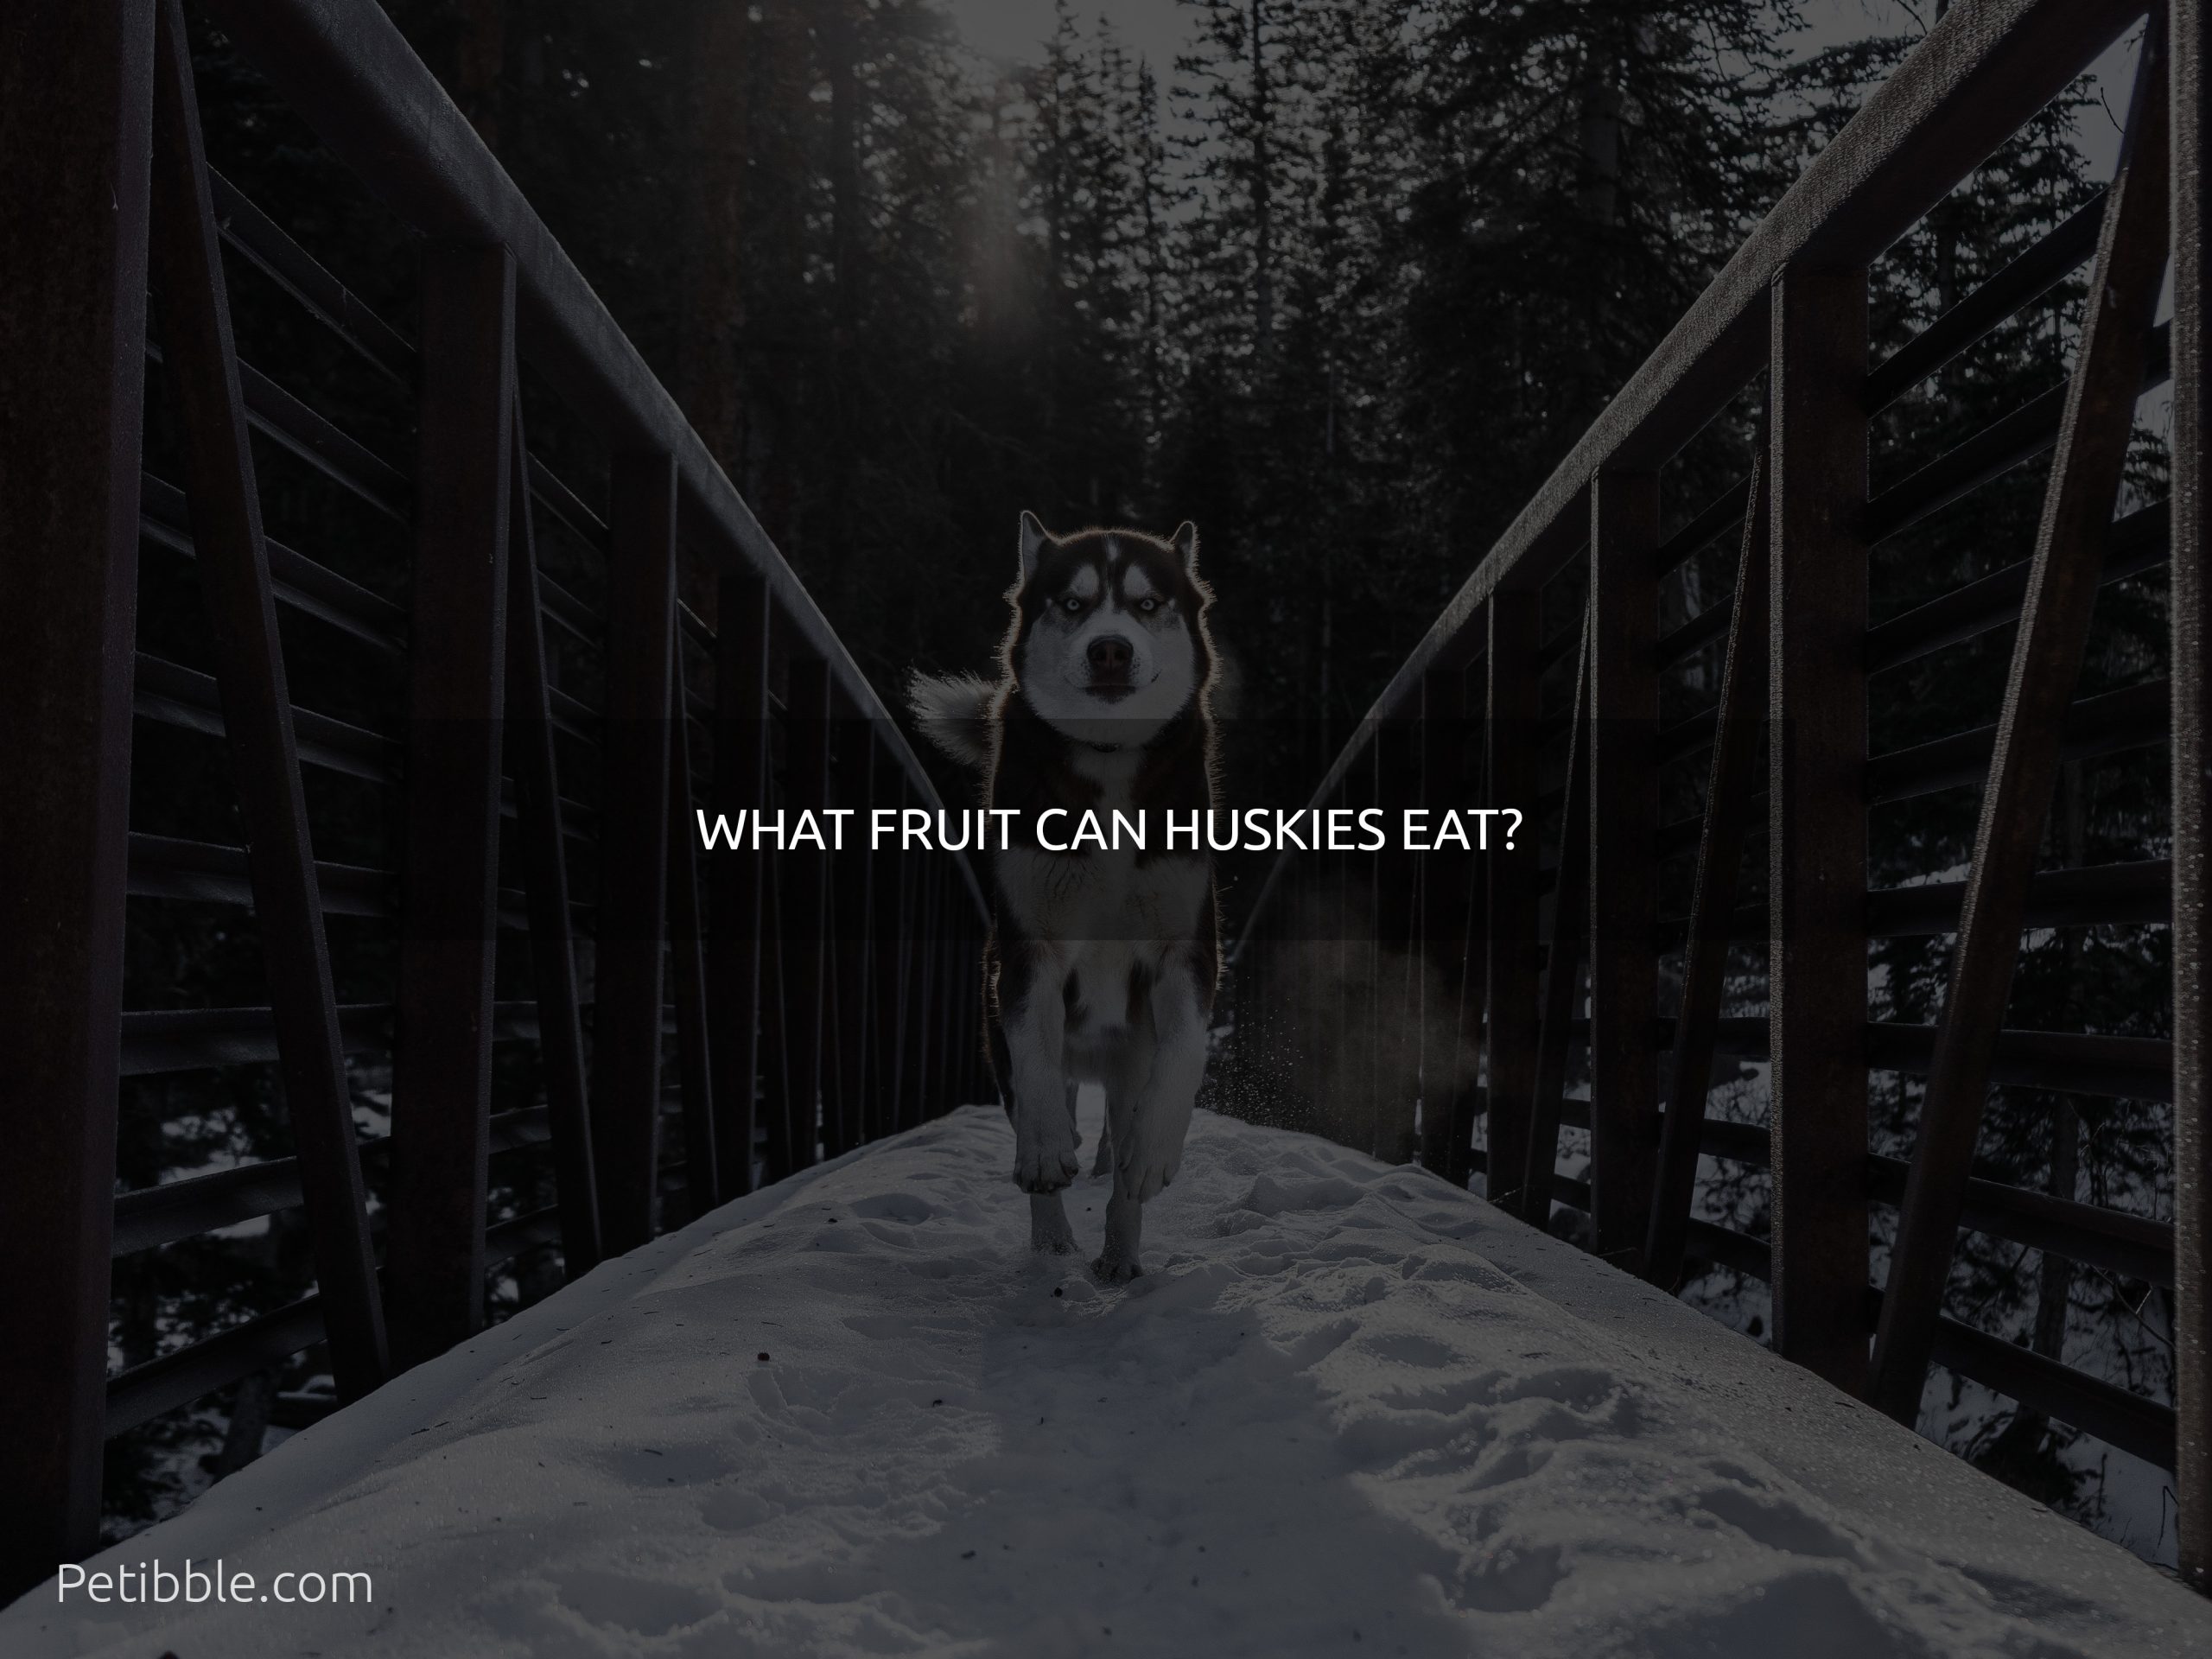 What fruit can huskies eat?